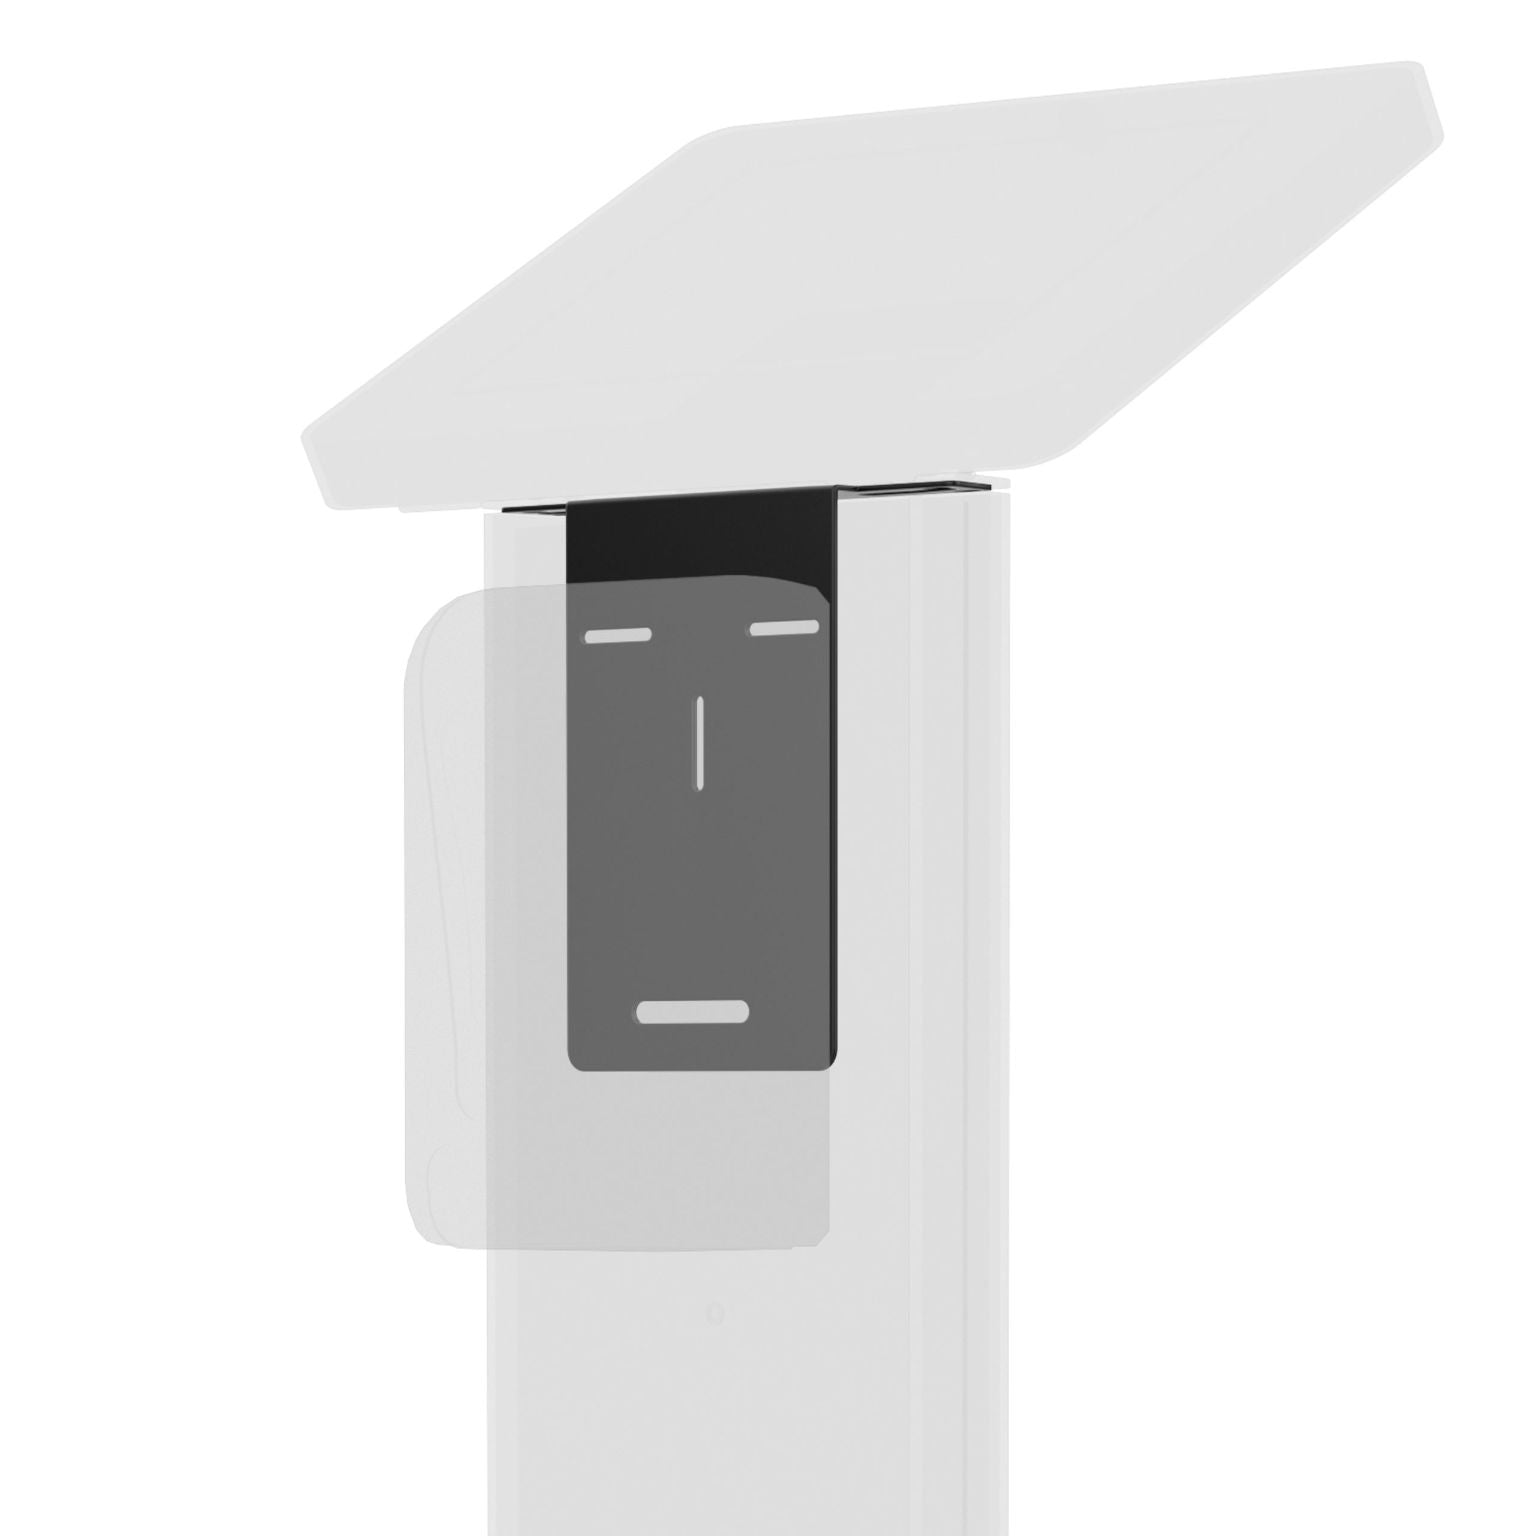 PARAF - Automatic Soap Dispenser Holder